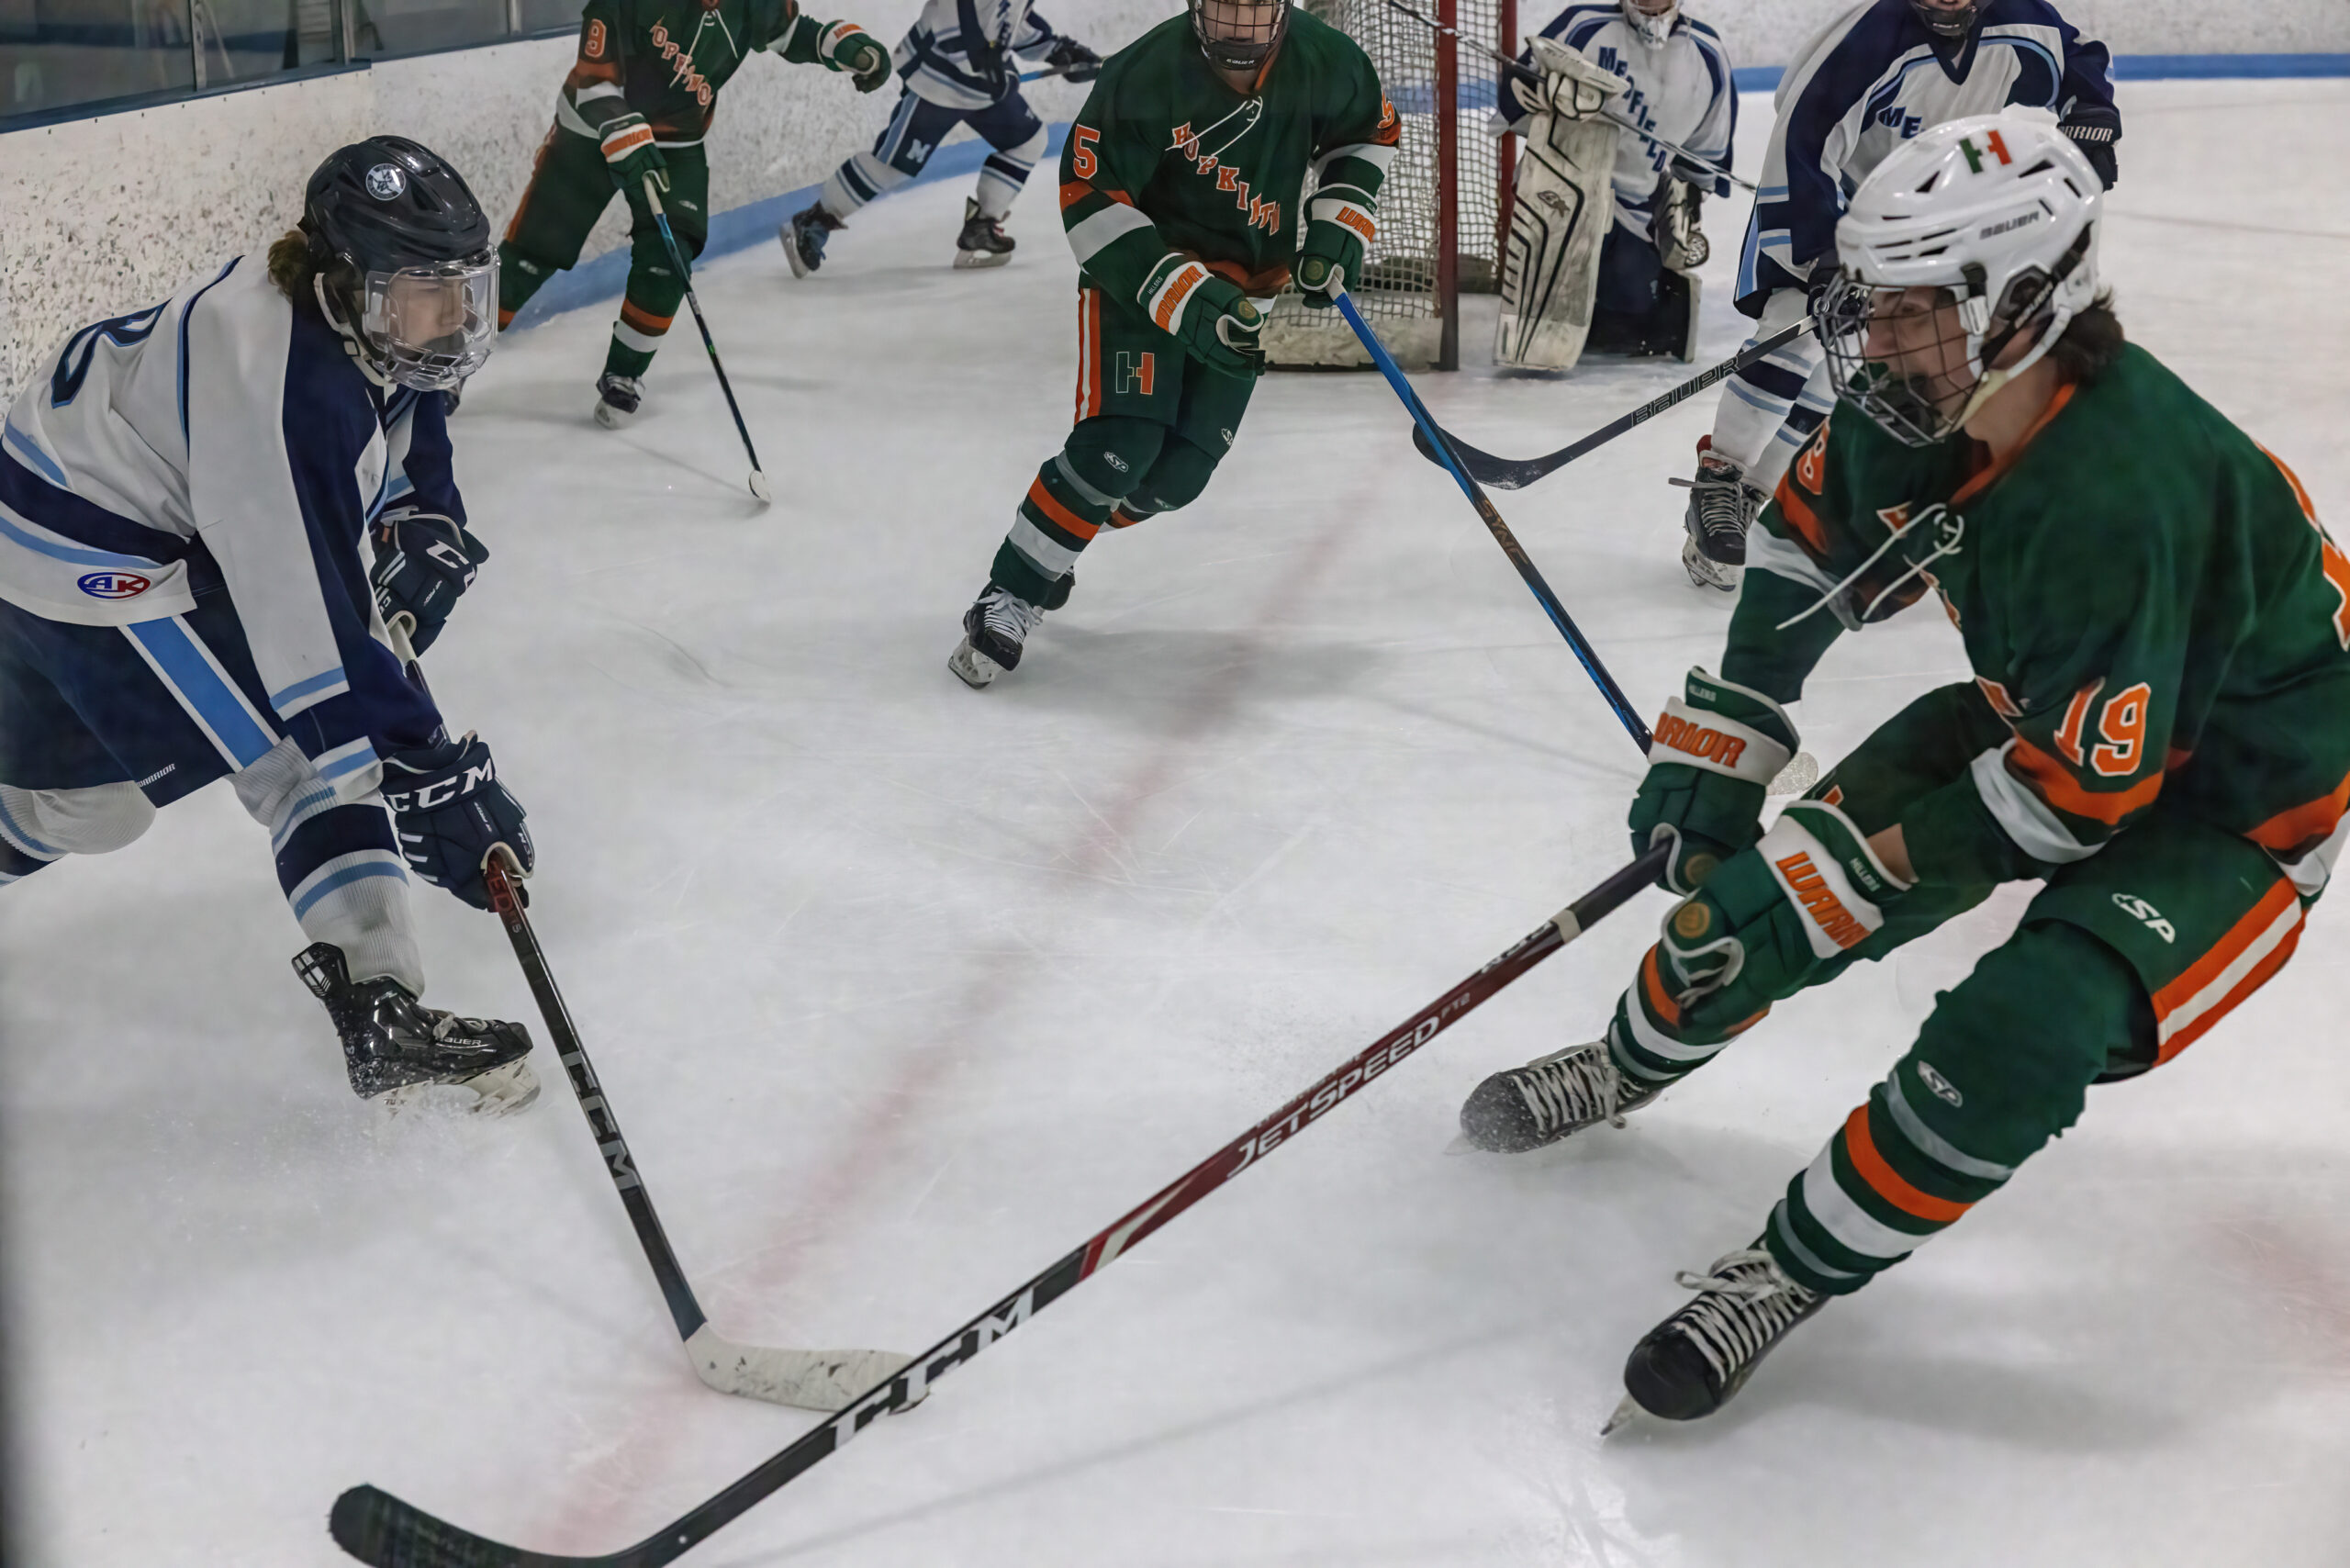 Photos: HHS boys hockey battles Medfield